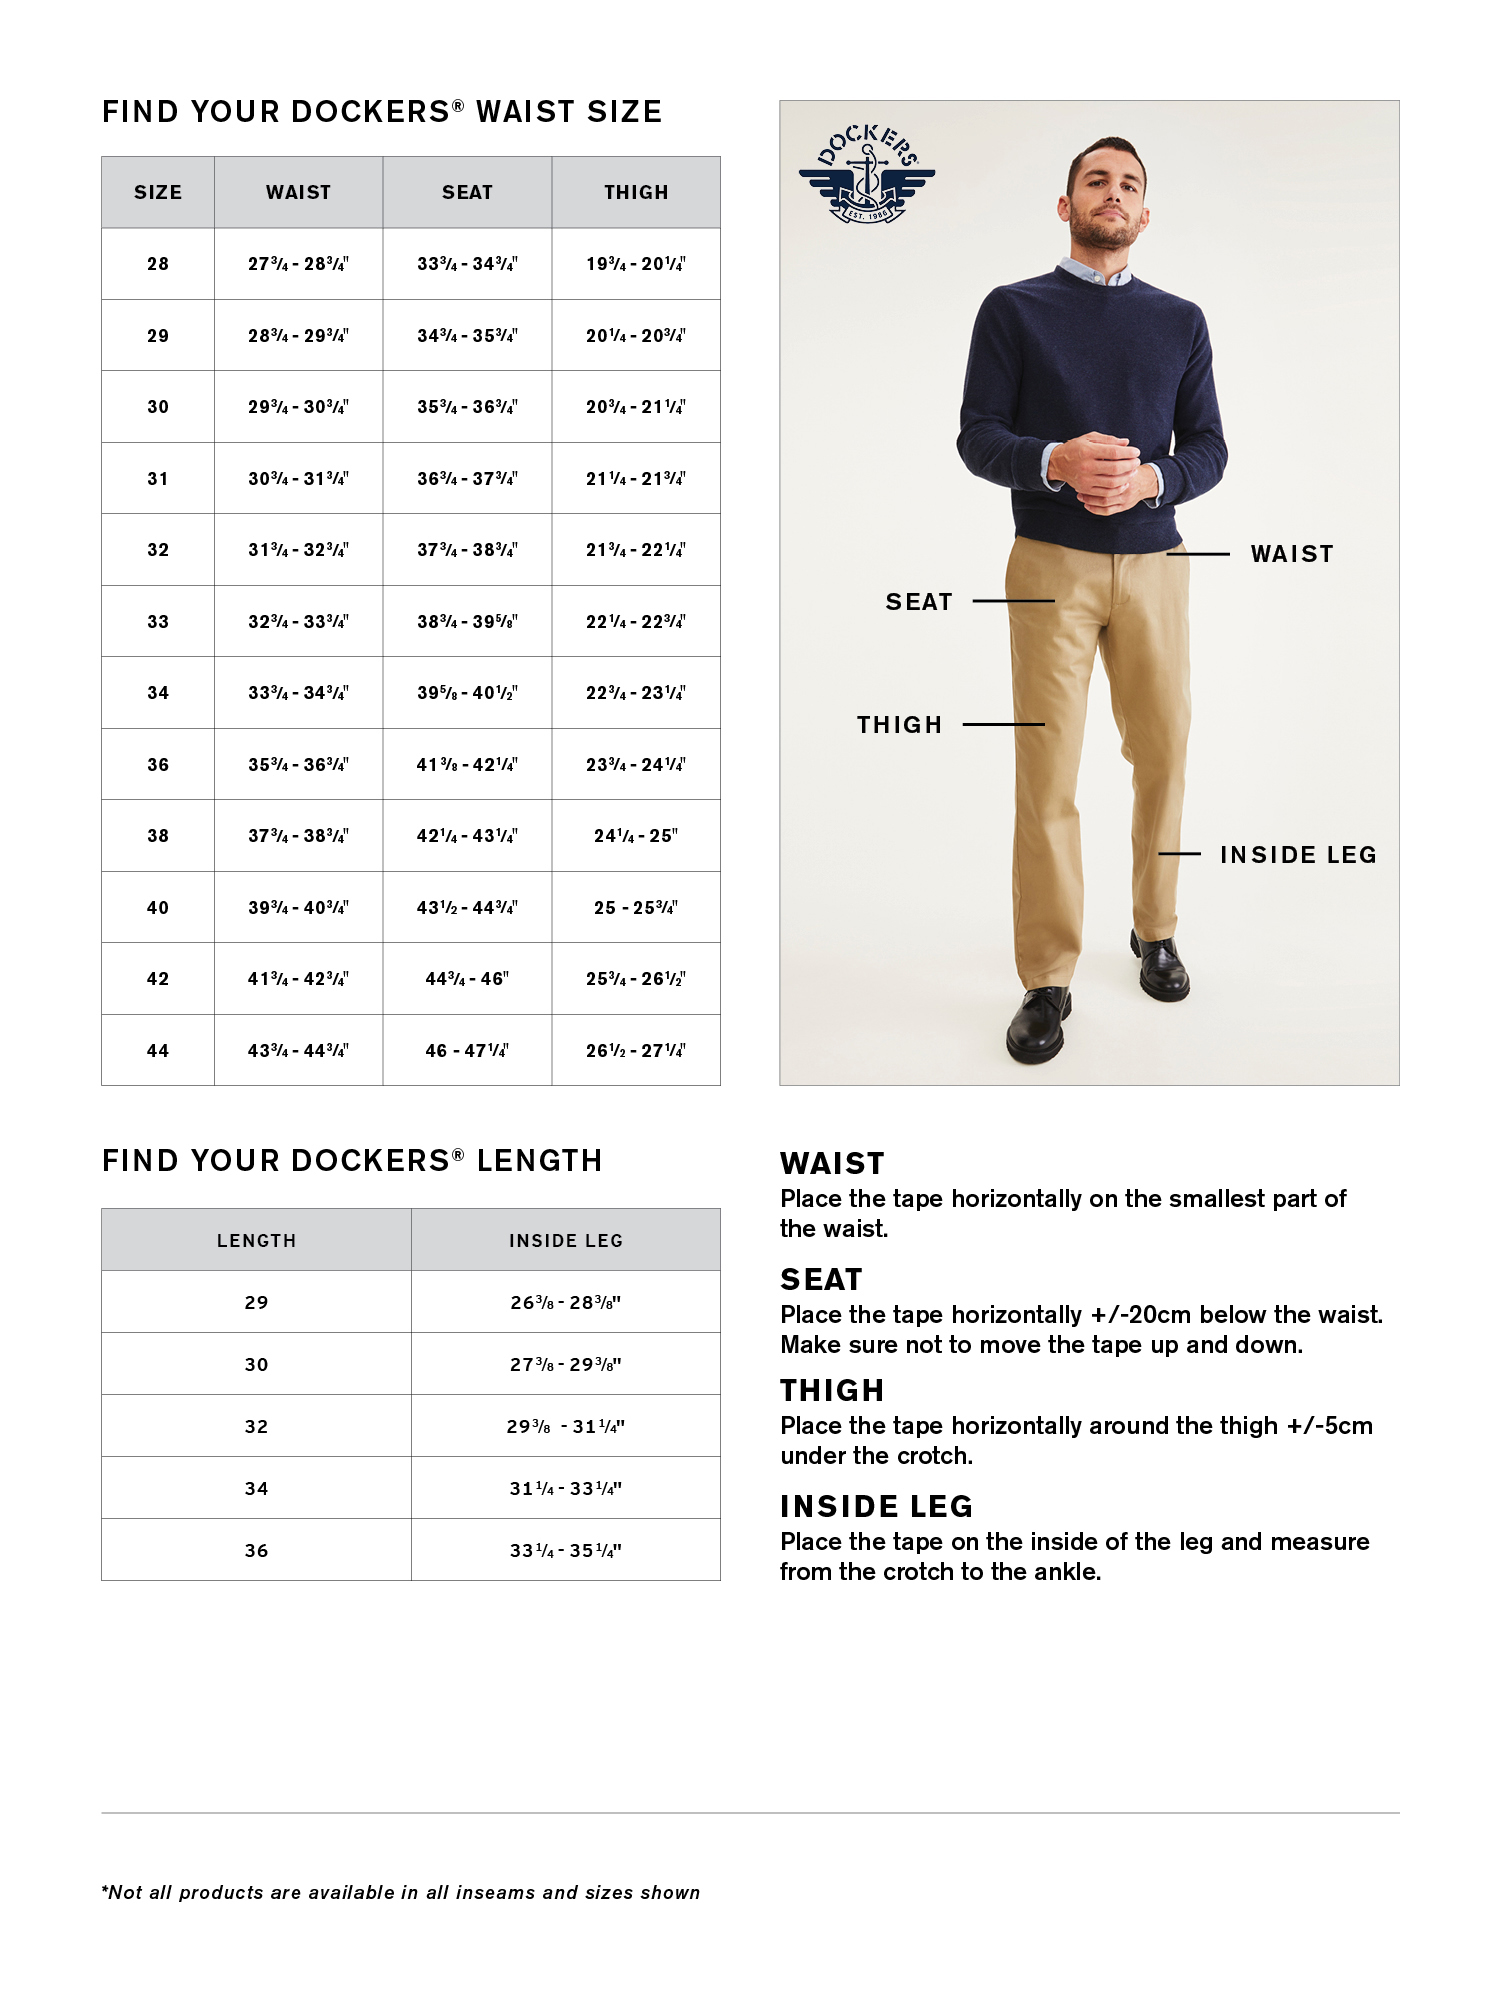 Dockers Men's Pleated Classic Fit Signature Khaki Lux Cotton Stretch Pants - image 4 of 6